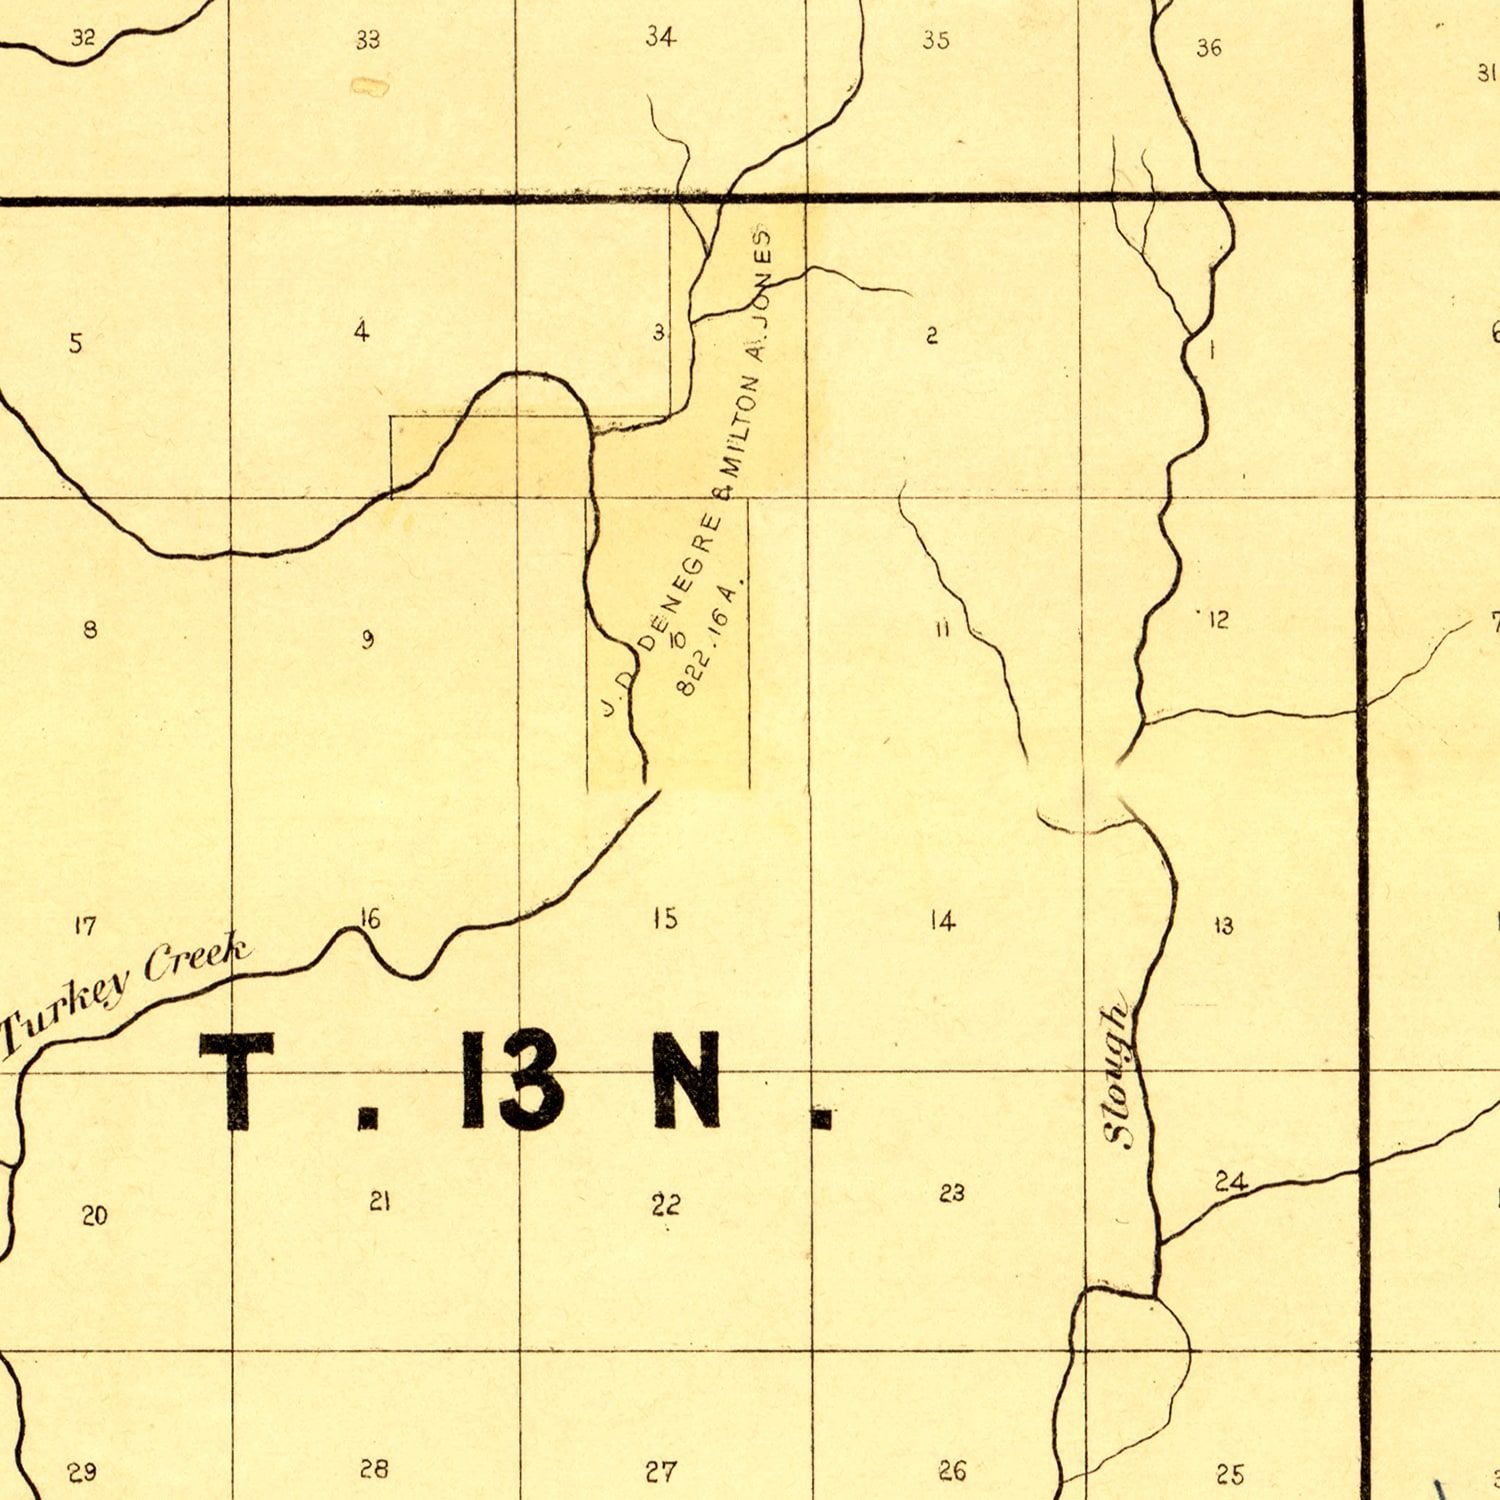 Vintage Map of Franklin Parish, Louisiana 1860